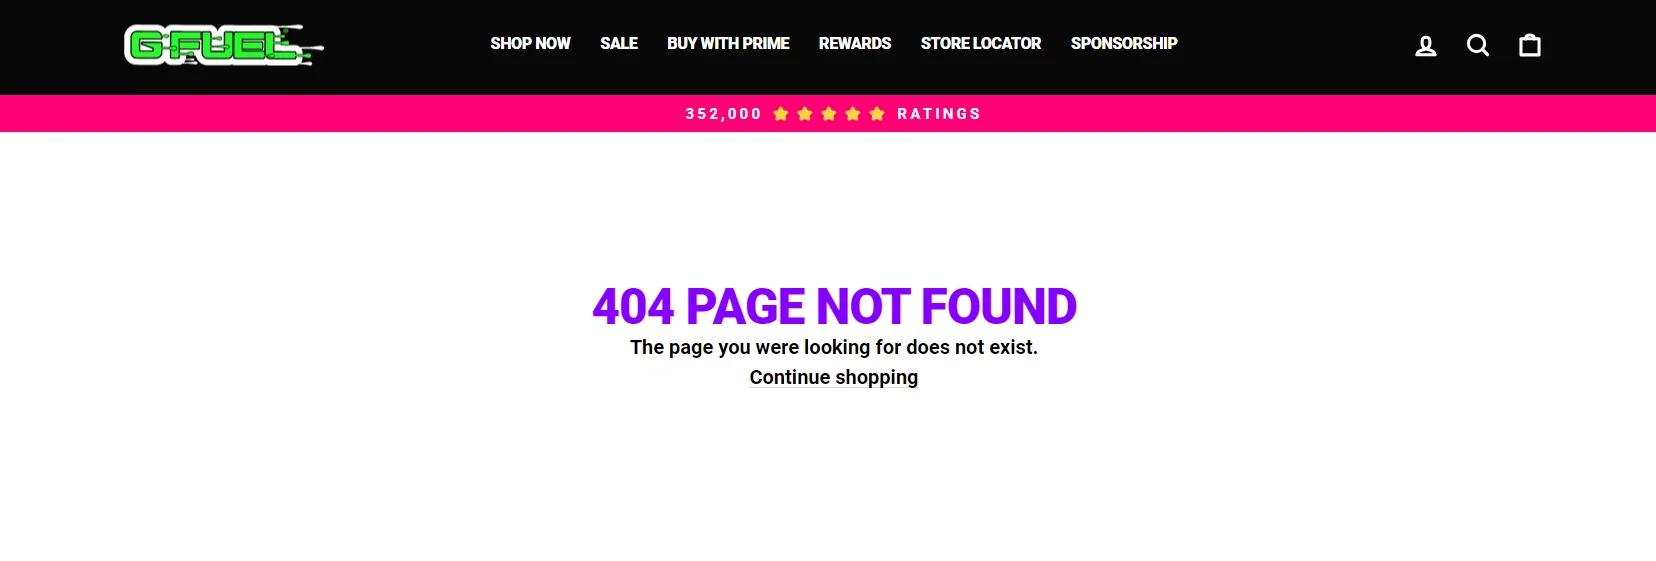 G-Fuel 웹사이트에 "404 PAGE NOT FOUND 찾고 있던 페이지가 존재하지 않습니다."라는 오류 메시지가 나타납니다.